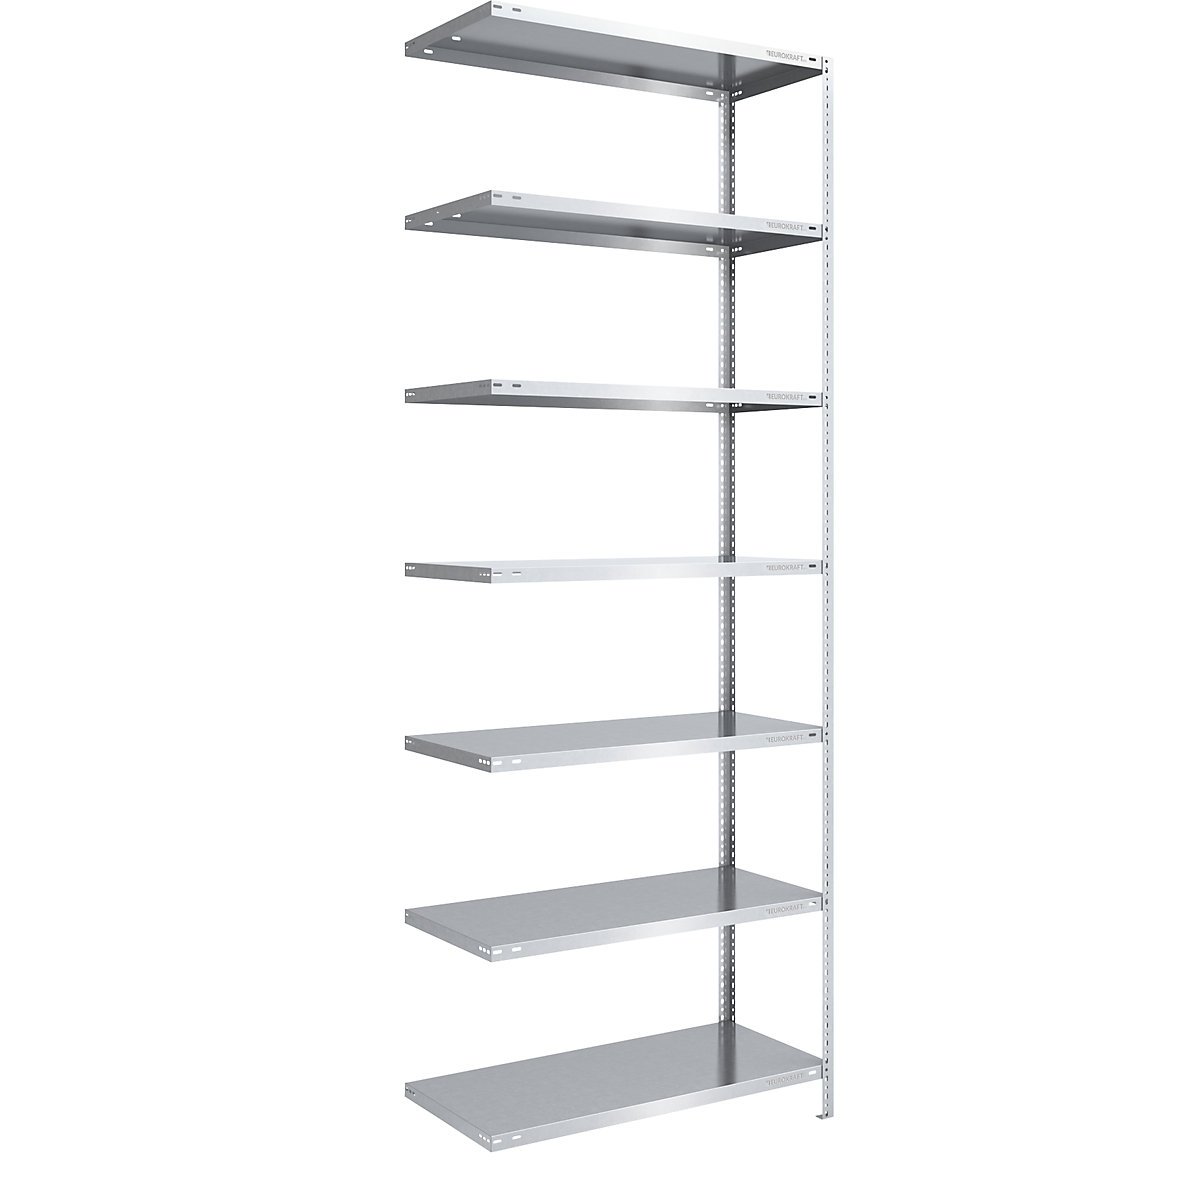 Bolt-together storage shelving, zinc plated, medium duty – eurokraft pro, shelf unit height 3000 mm, shelf width 1000 mm, depth 600 mm, extension shelf unit-7